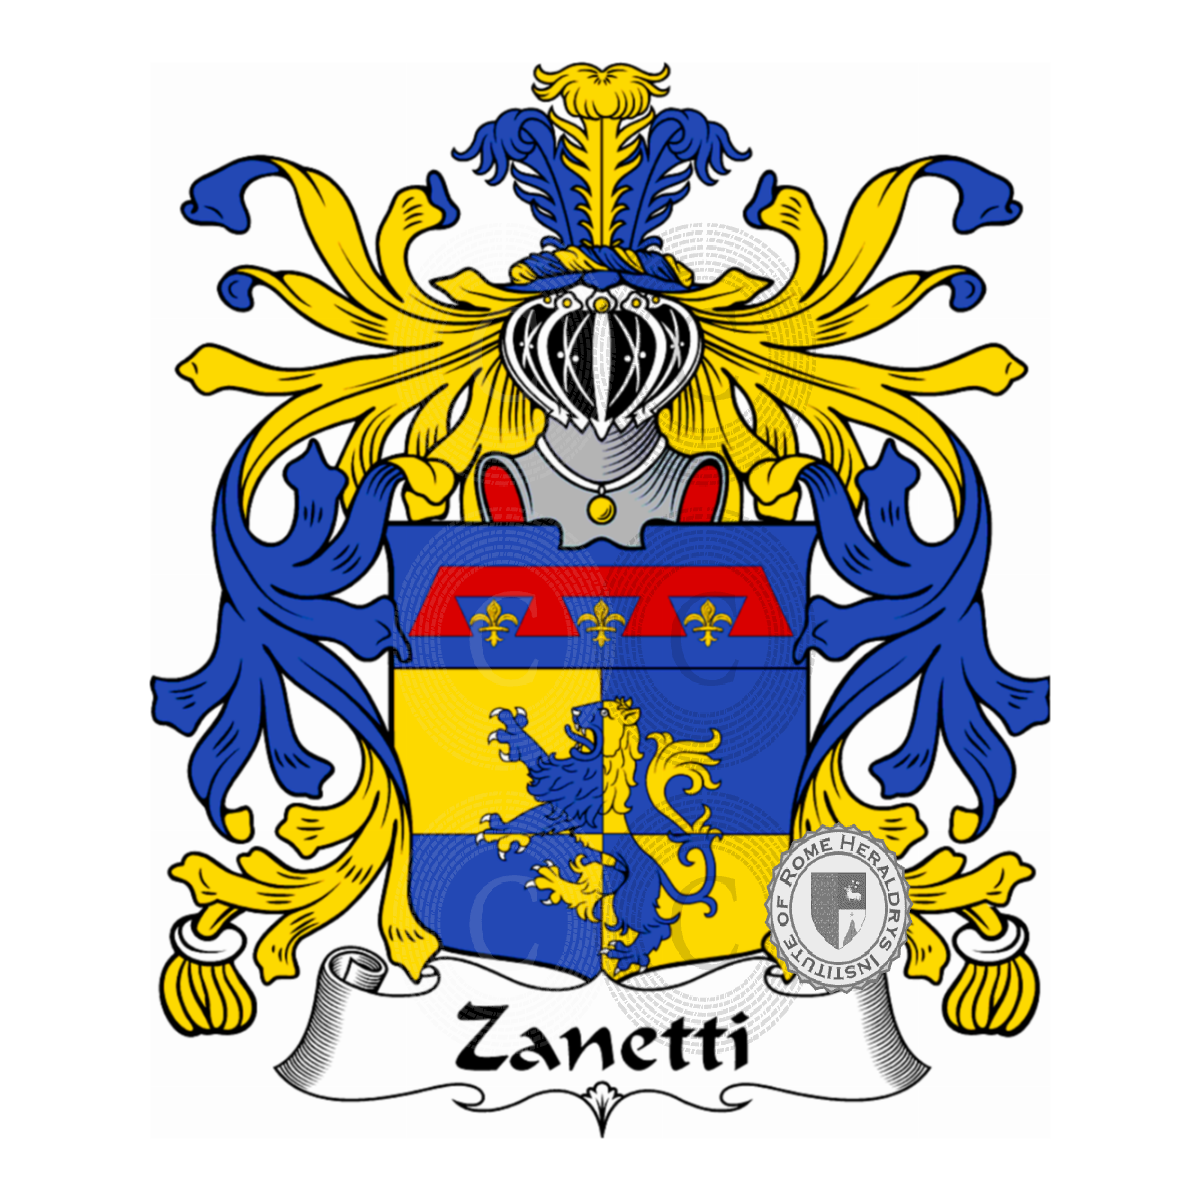 Brasão da famíliaZanetti, de Zanetti,Zanelli,Zanet,Zanetto,Zuanetti